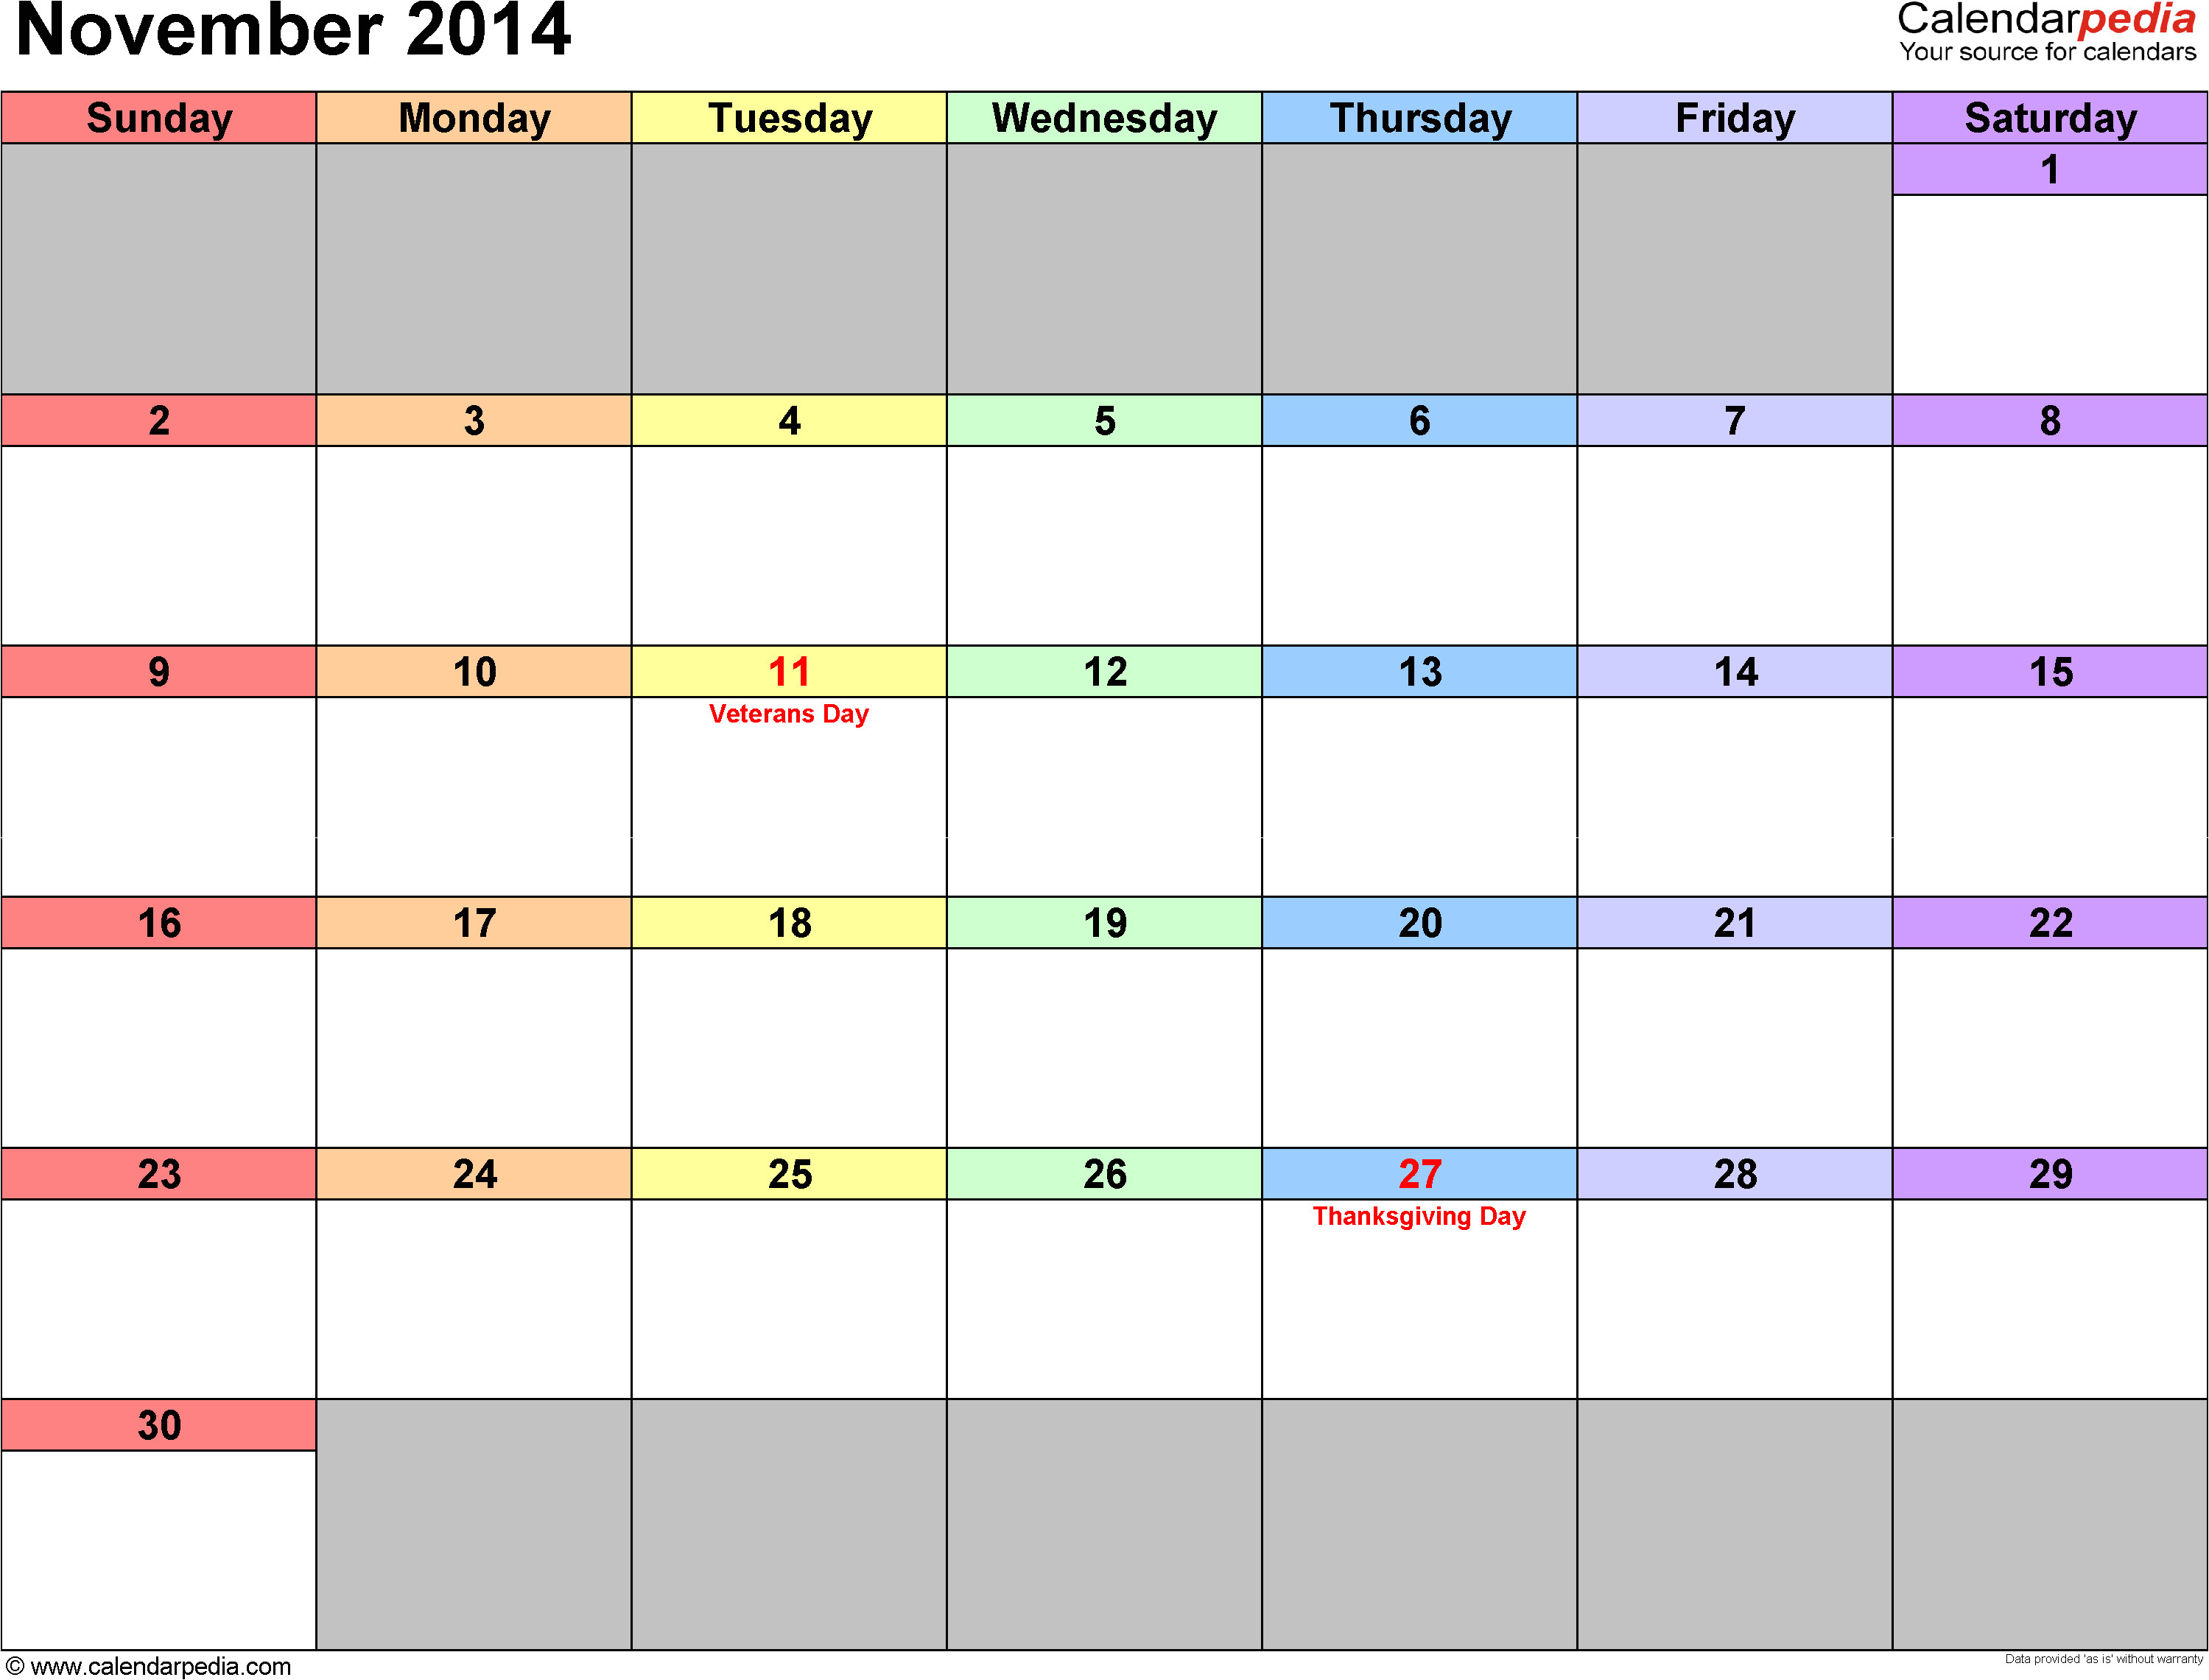 Blank Calendar Template November 2014 November 2014 Calendars for Word Excel Pdf